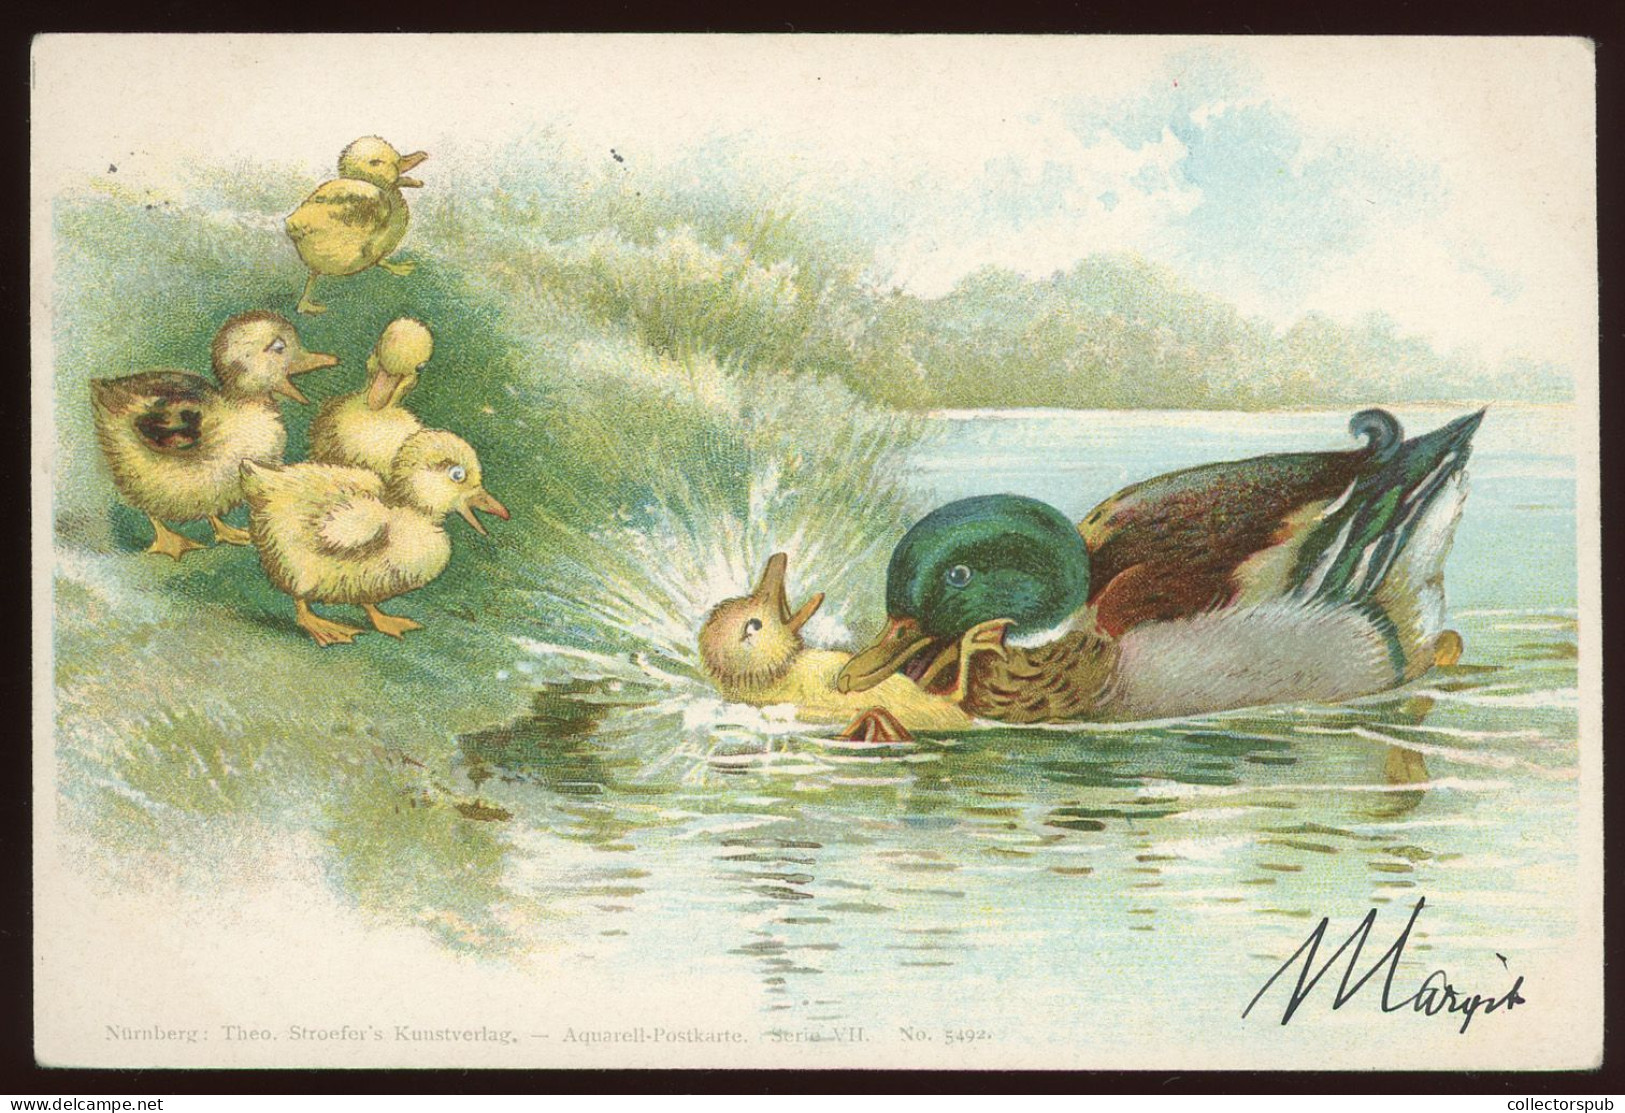 BIRD Vintage Duck Postcard  1898. Litho - Birds